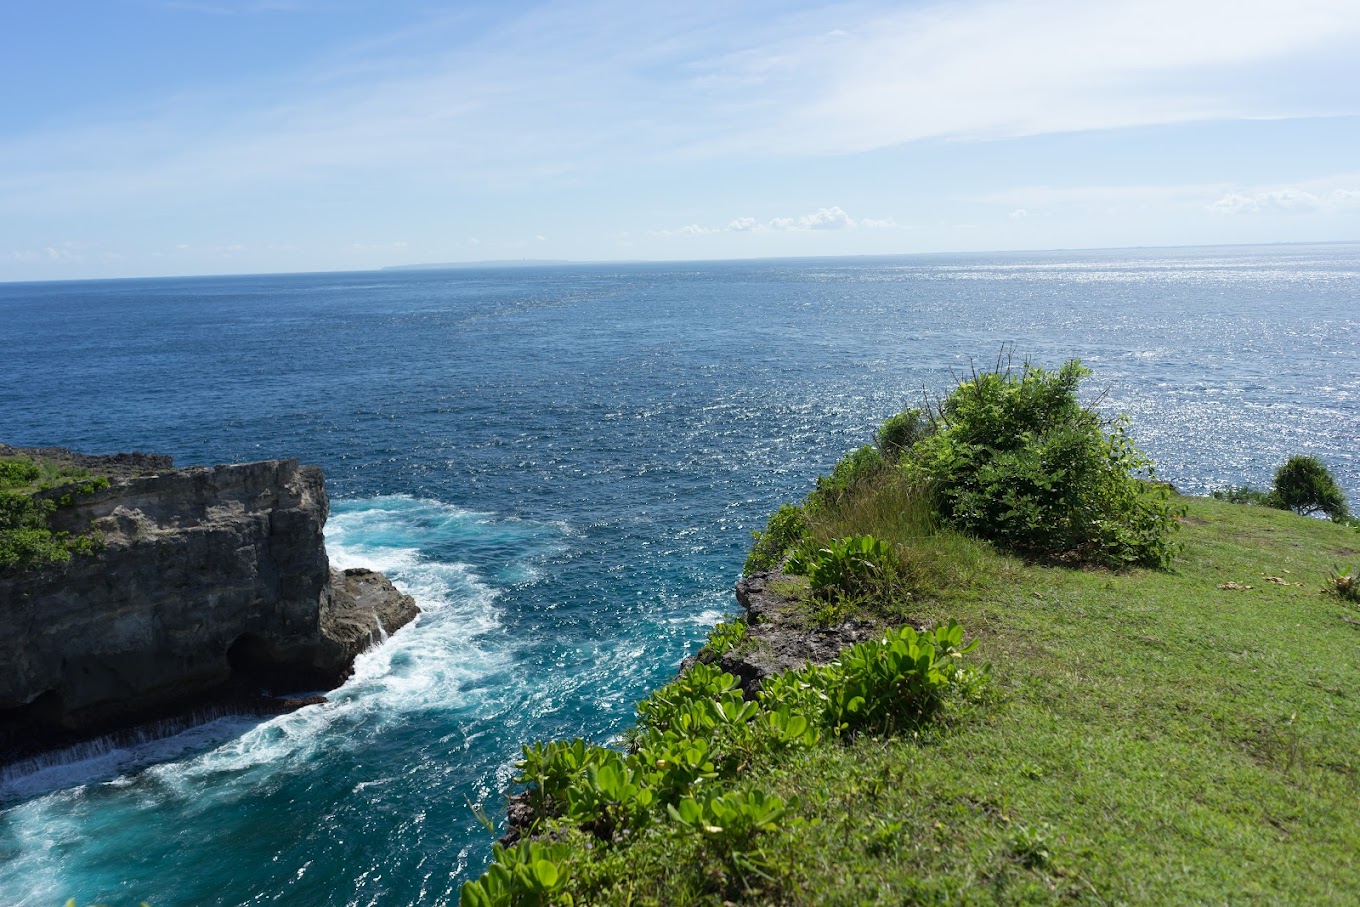 Destinasti Keindahan Wisata Pantai Andus di Nusapenida Klun gkung Bali